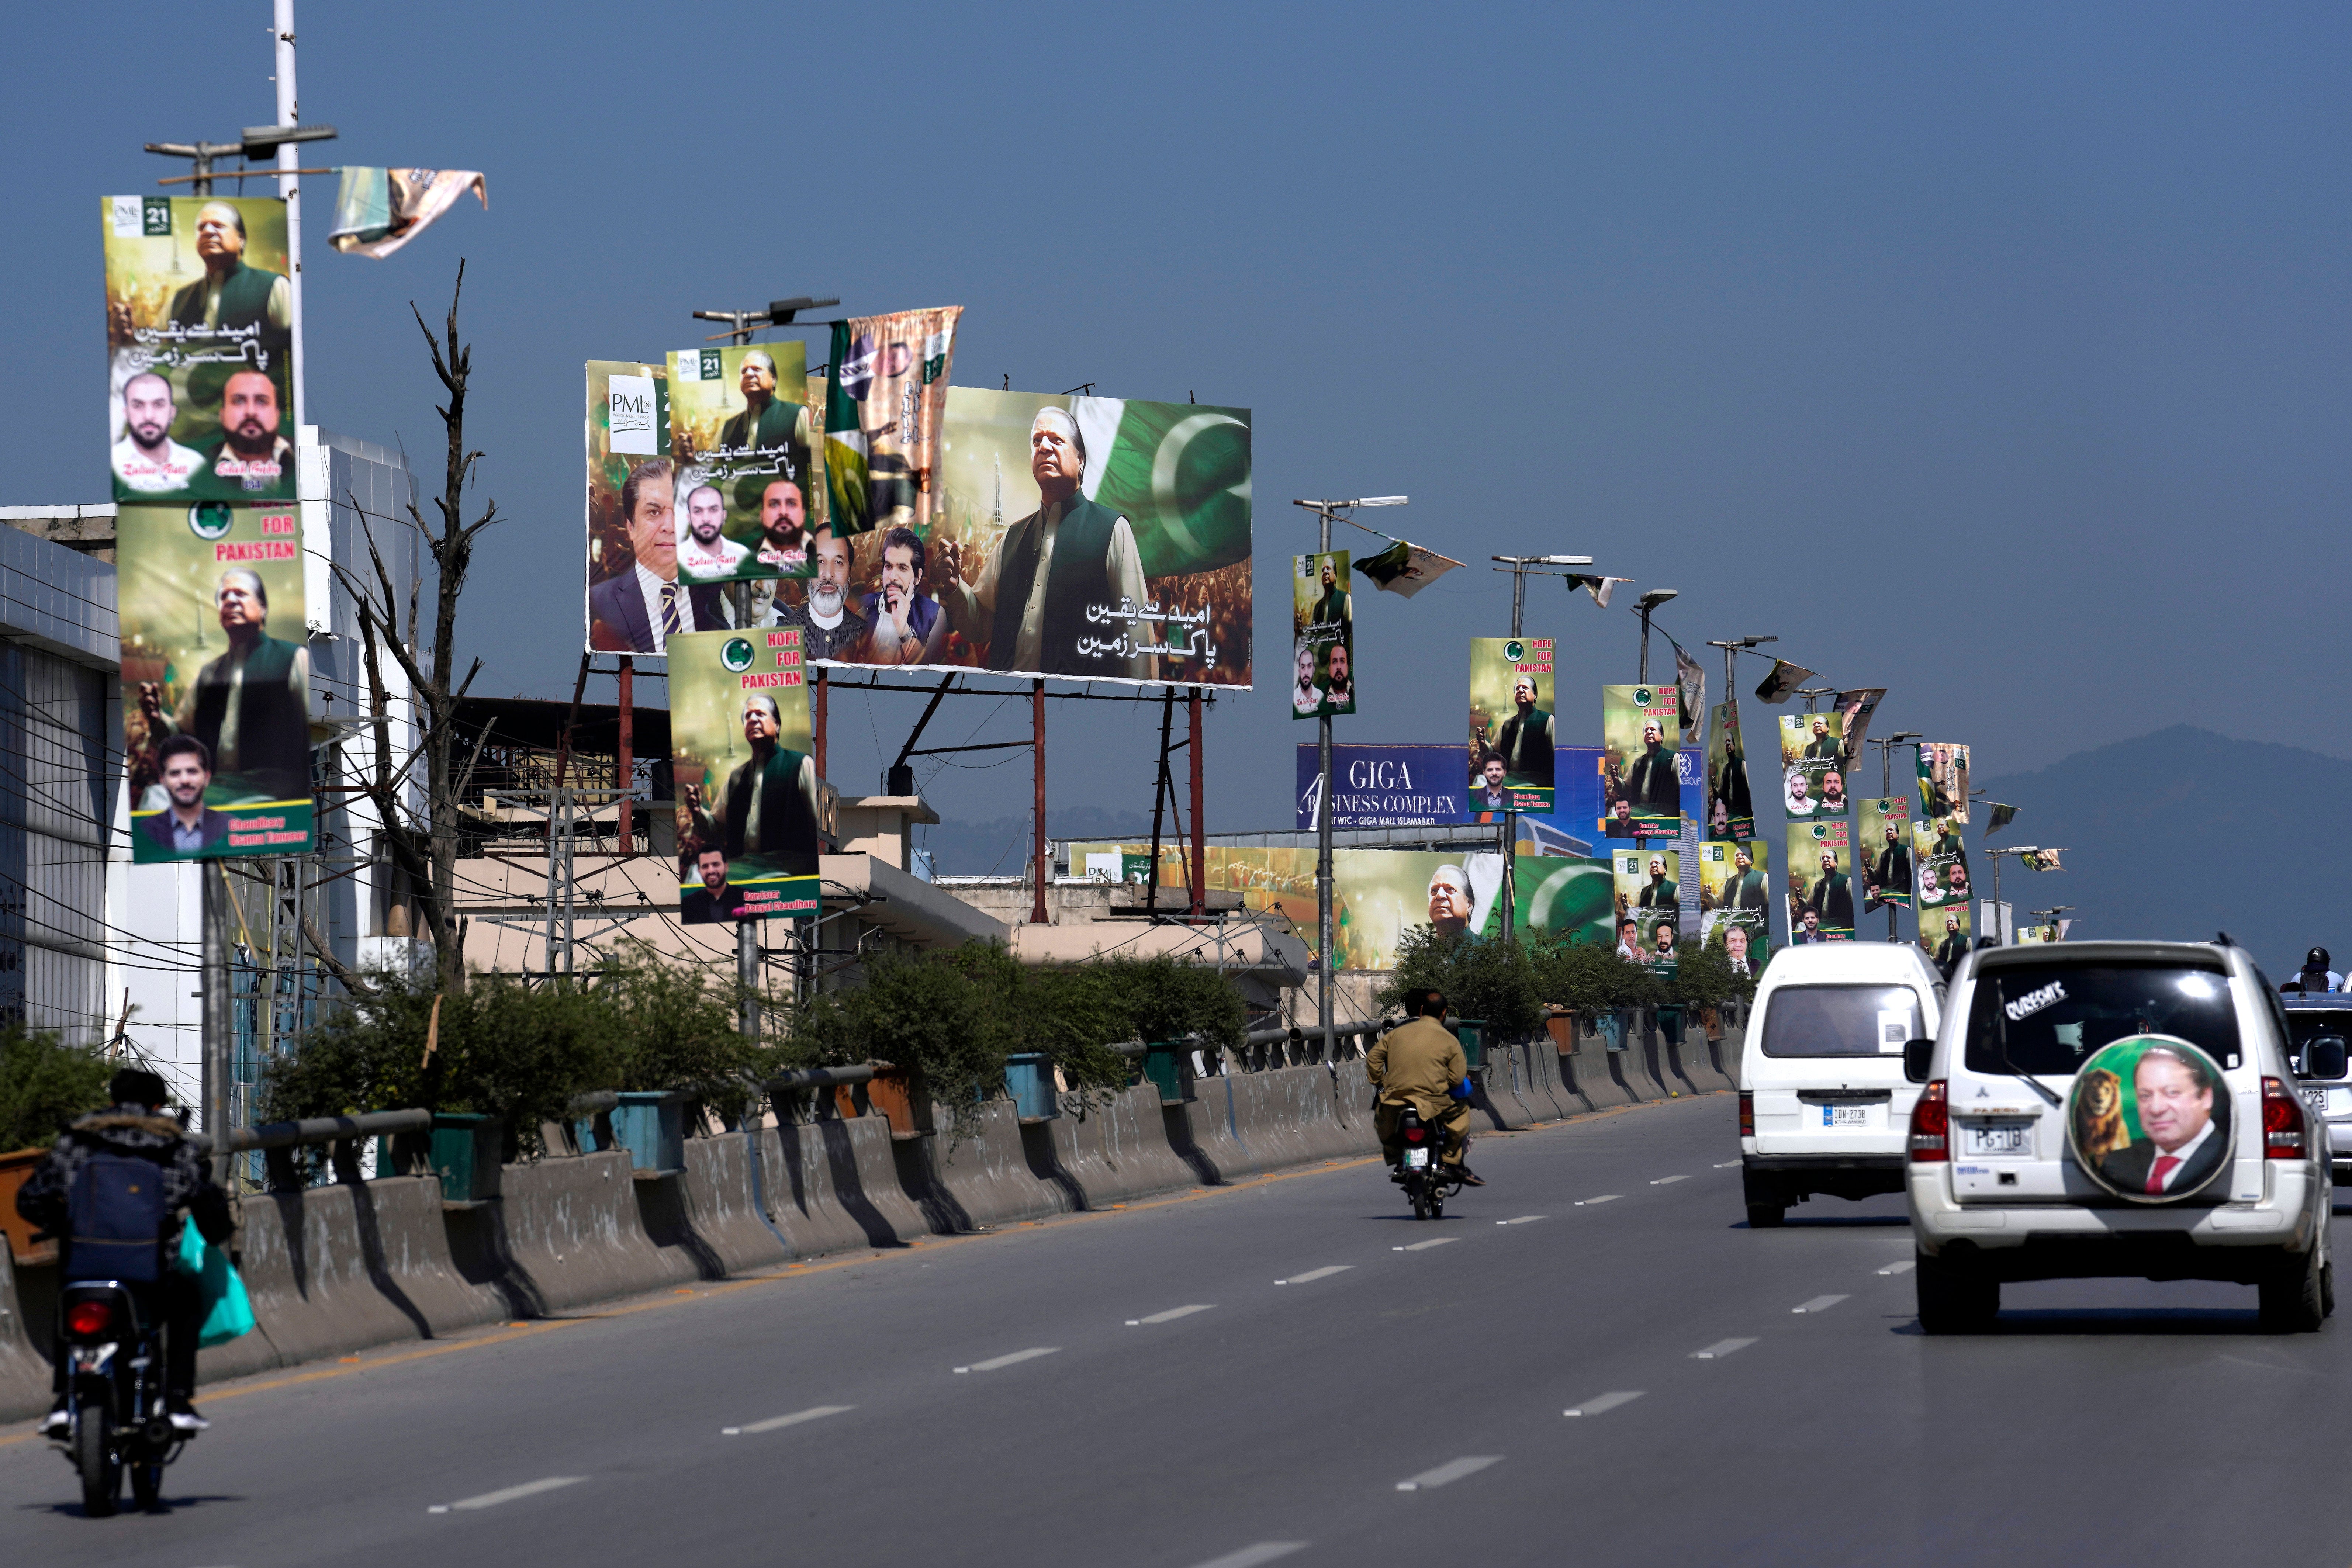 Welcoming banners for Nawaz Sharif on a highway in Rawalpindi